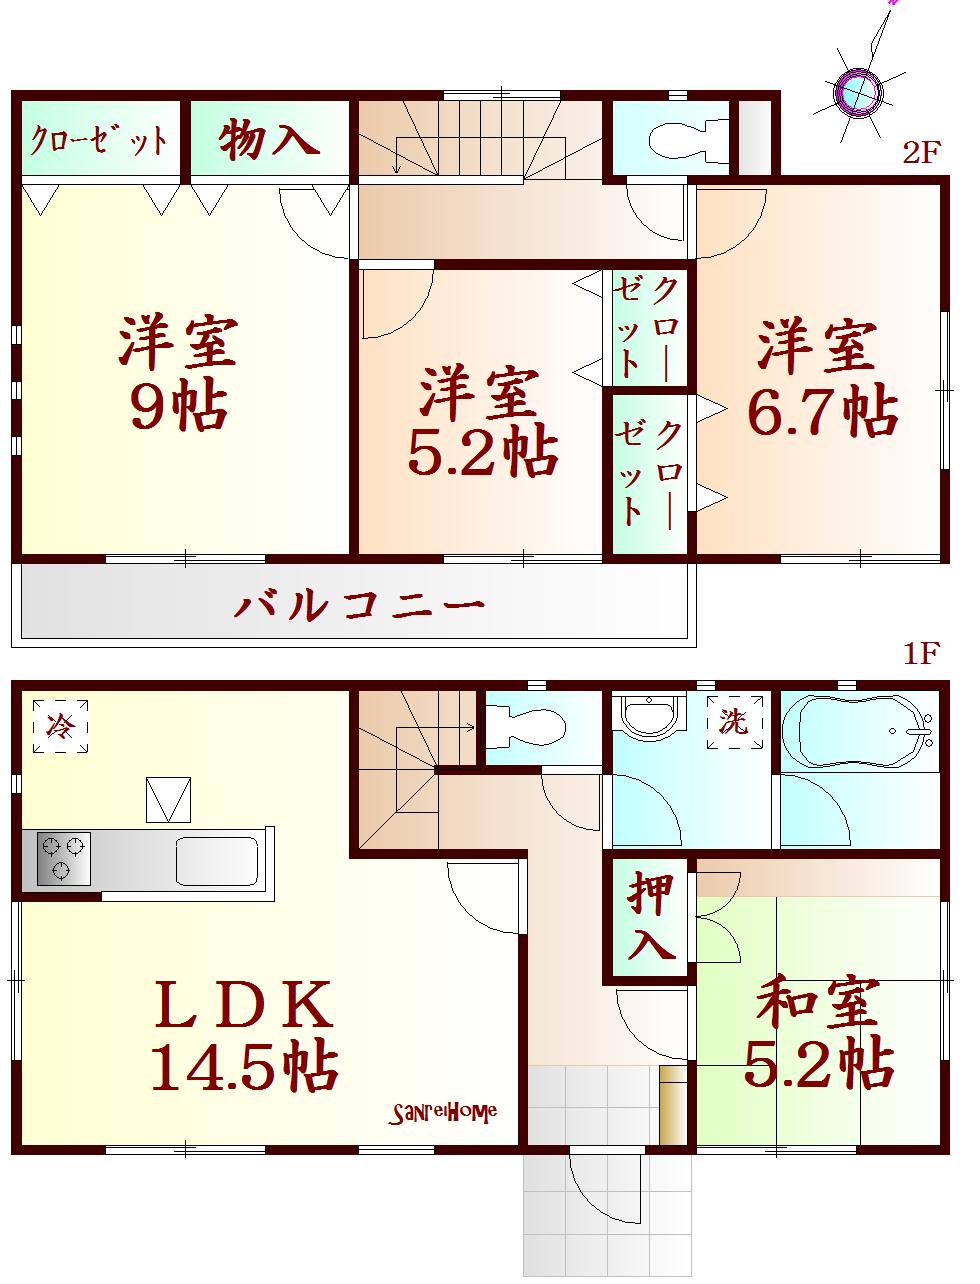 Floor plan. (1-3 Building), Price 17.8 million yen, 4LDK, Land area 197.49 sq m , Building area 95.57 sq m